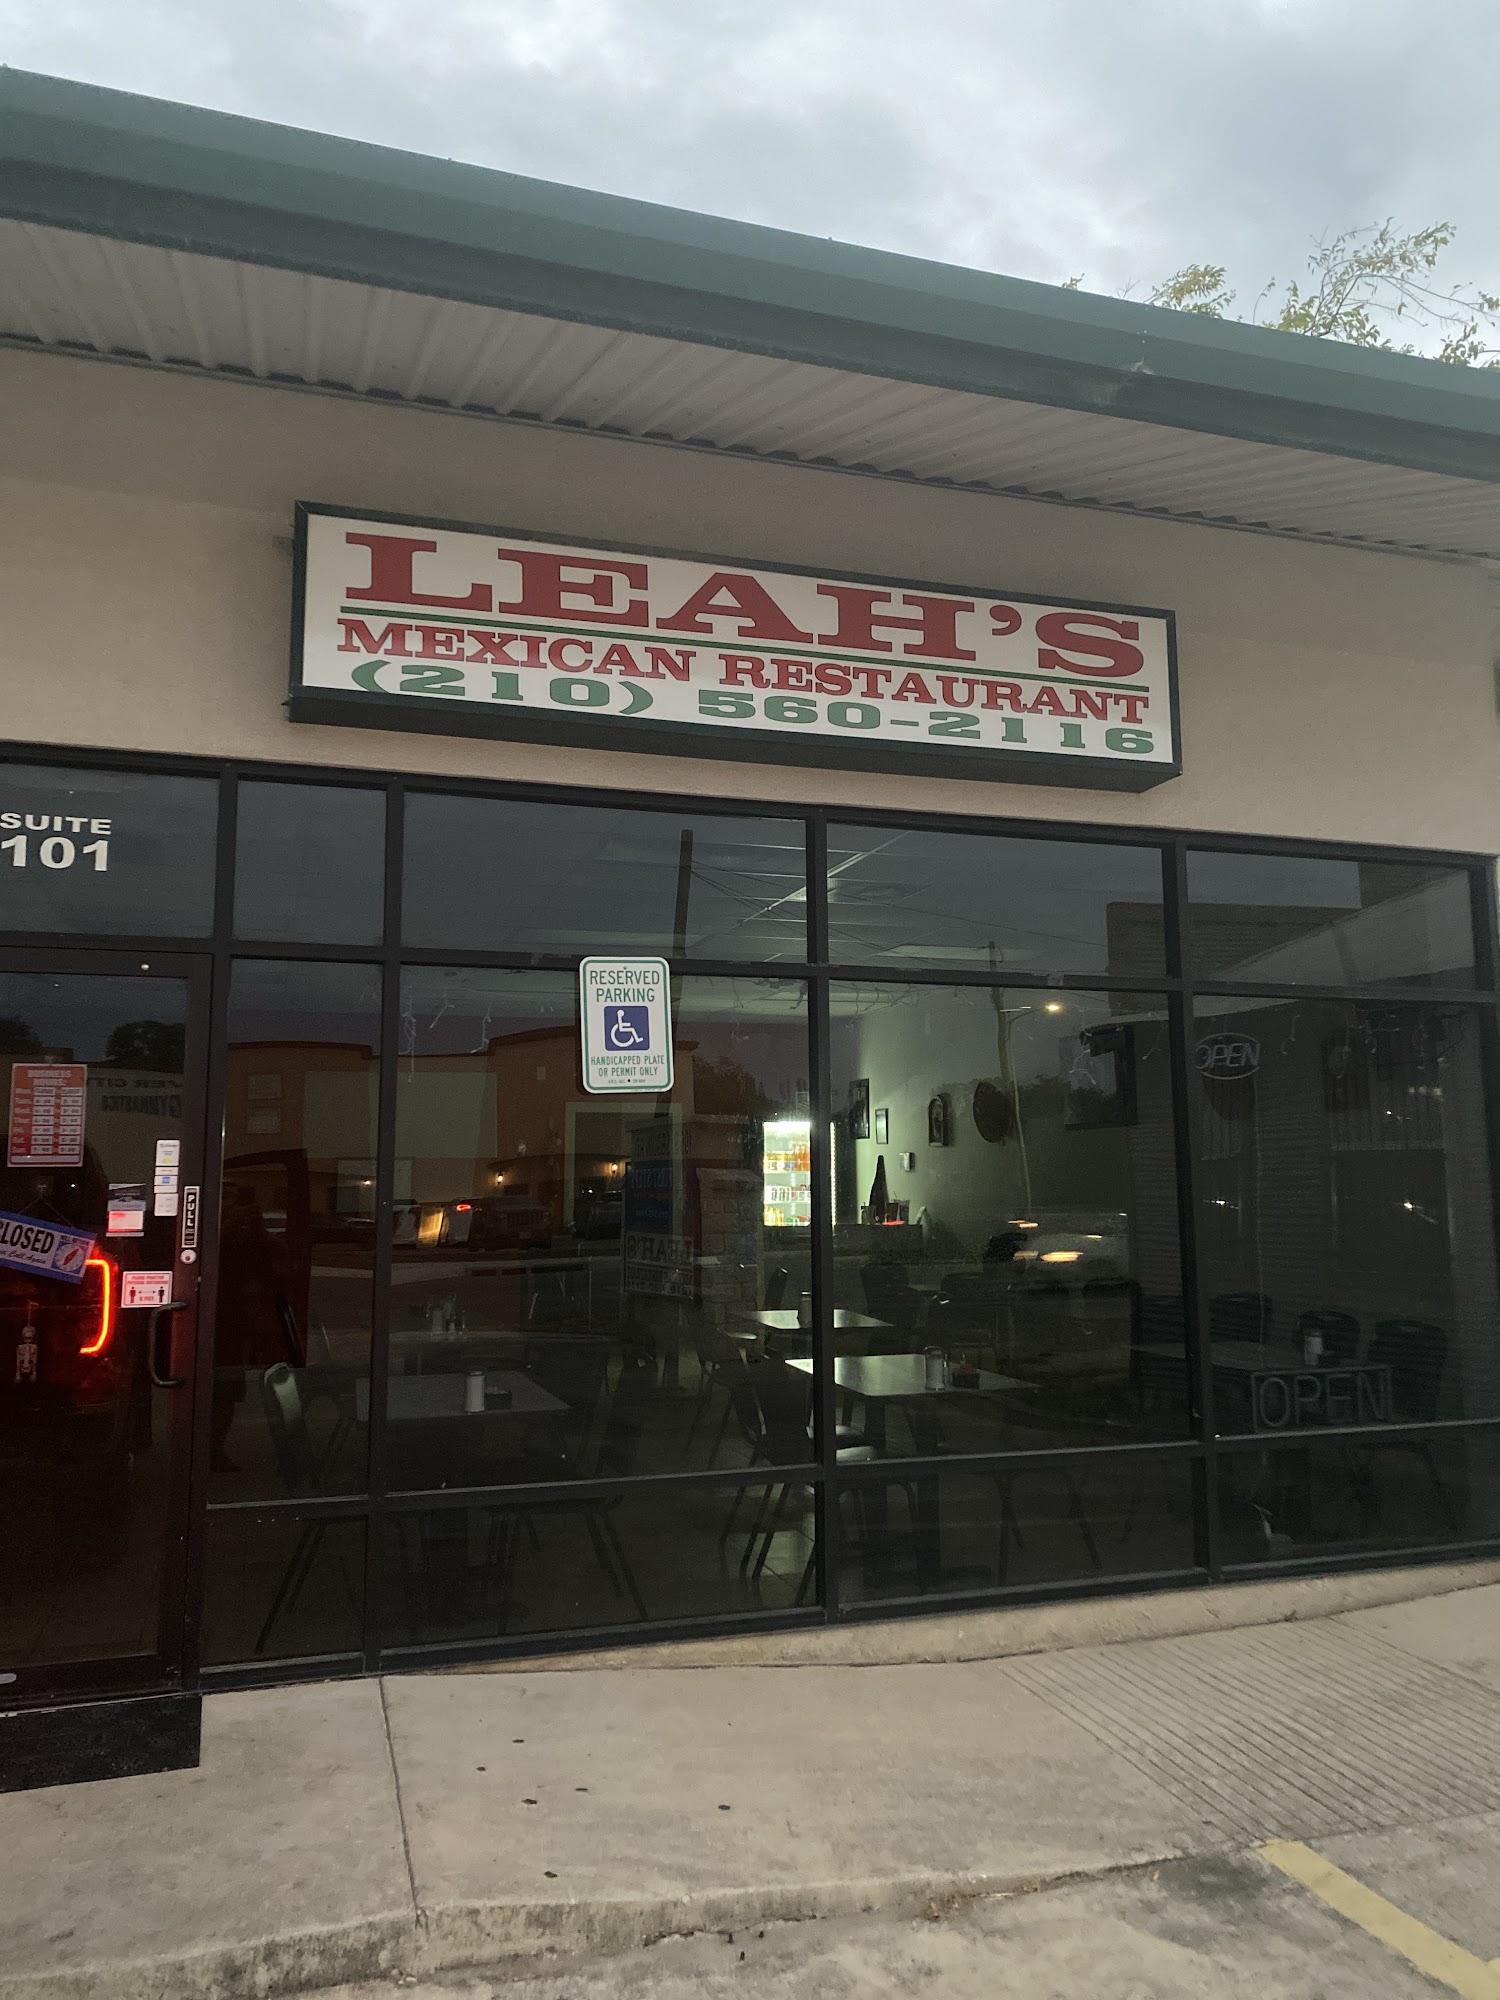 Leah’s Mexican restaurant